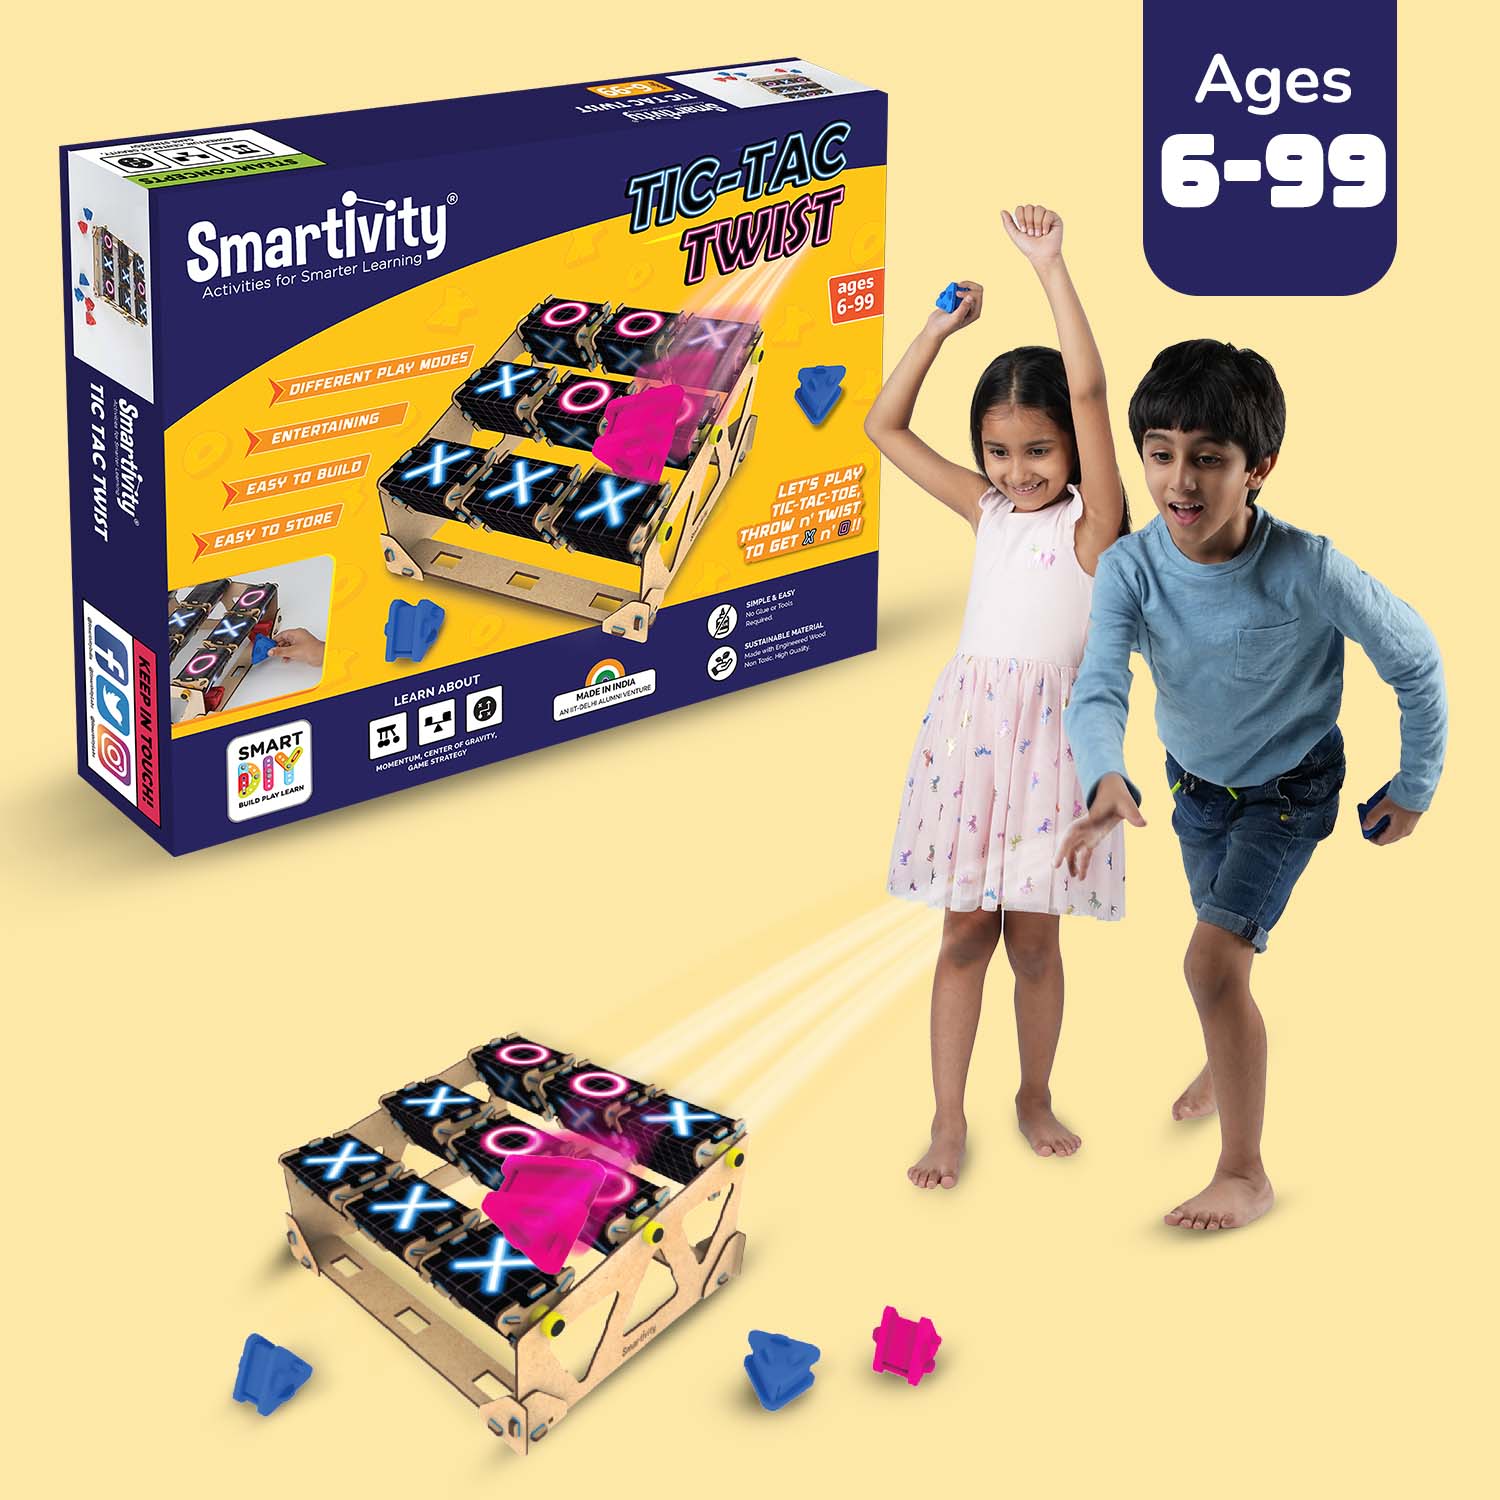 Buy Tic Tac Toe Game For Kids Online